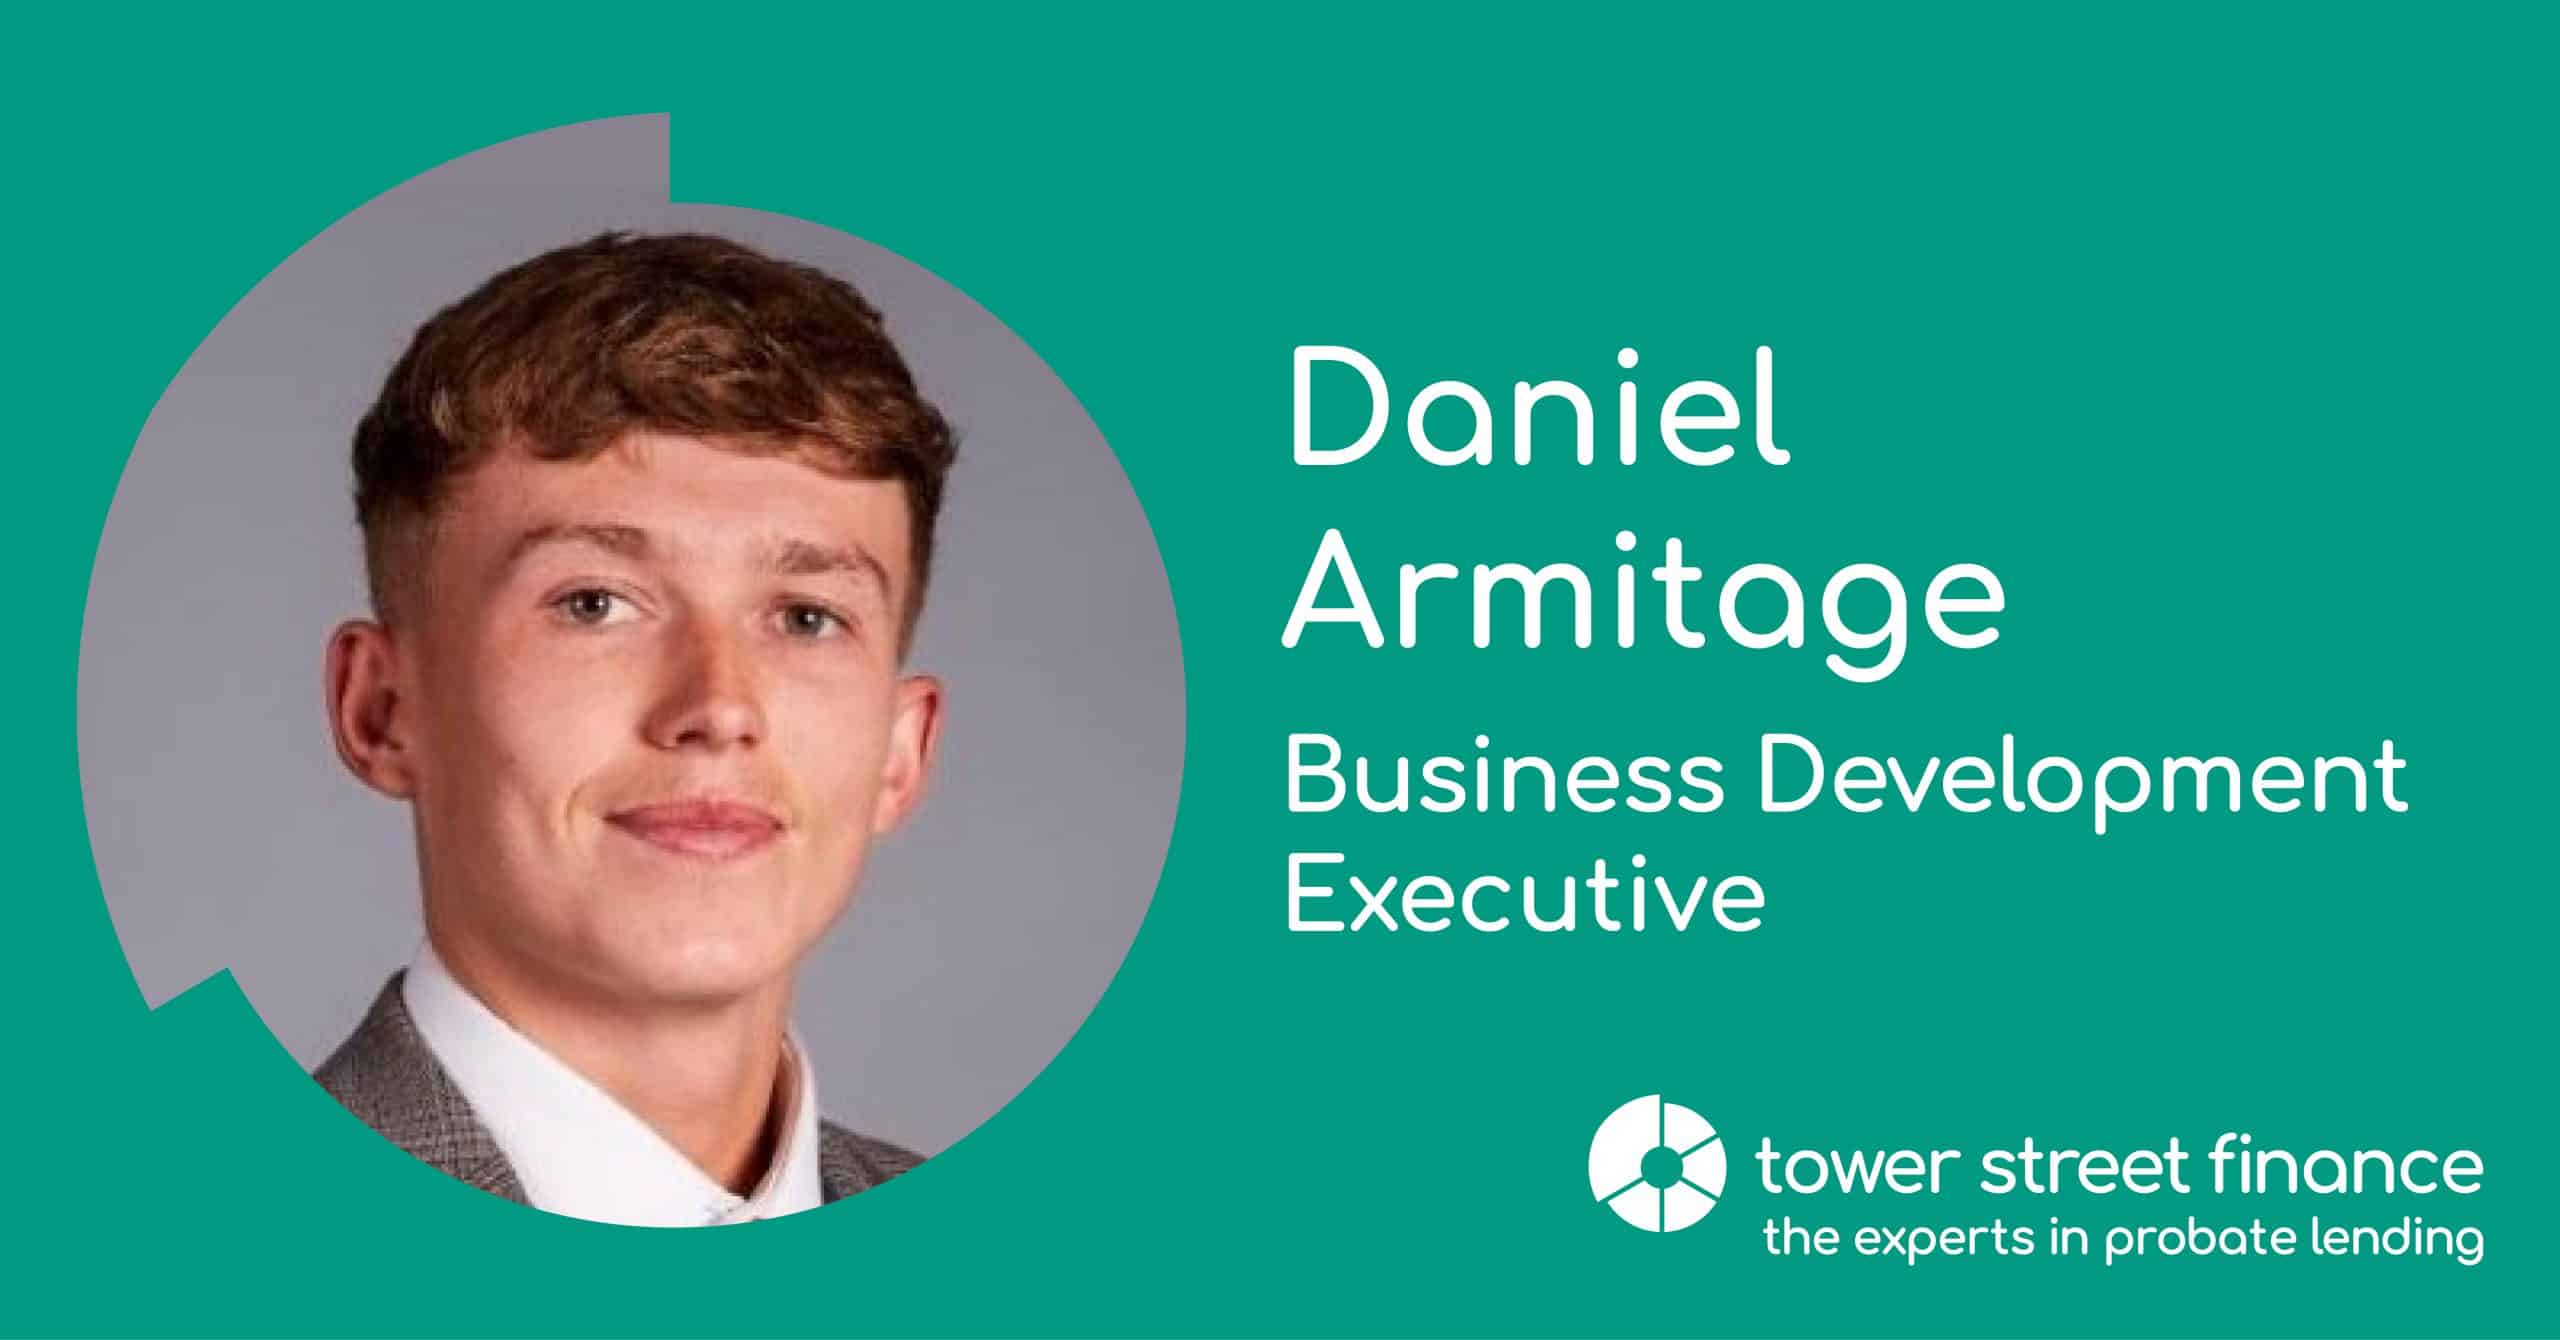 Daniel joins Tower Street Finance